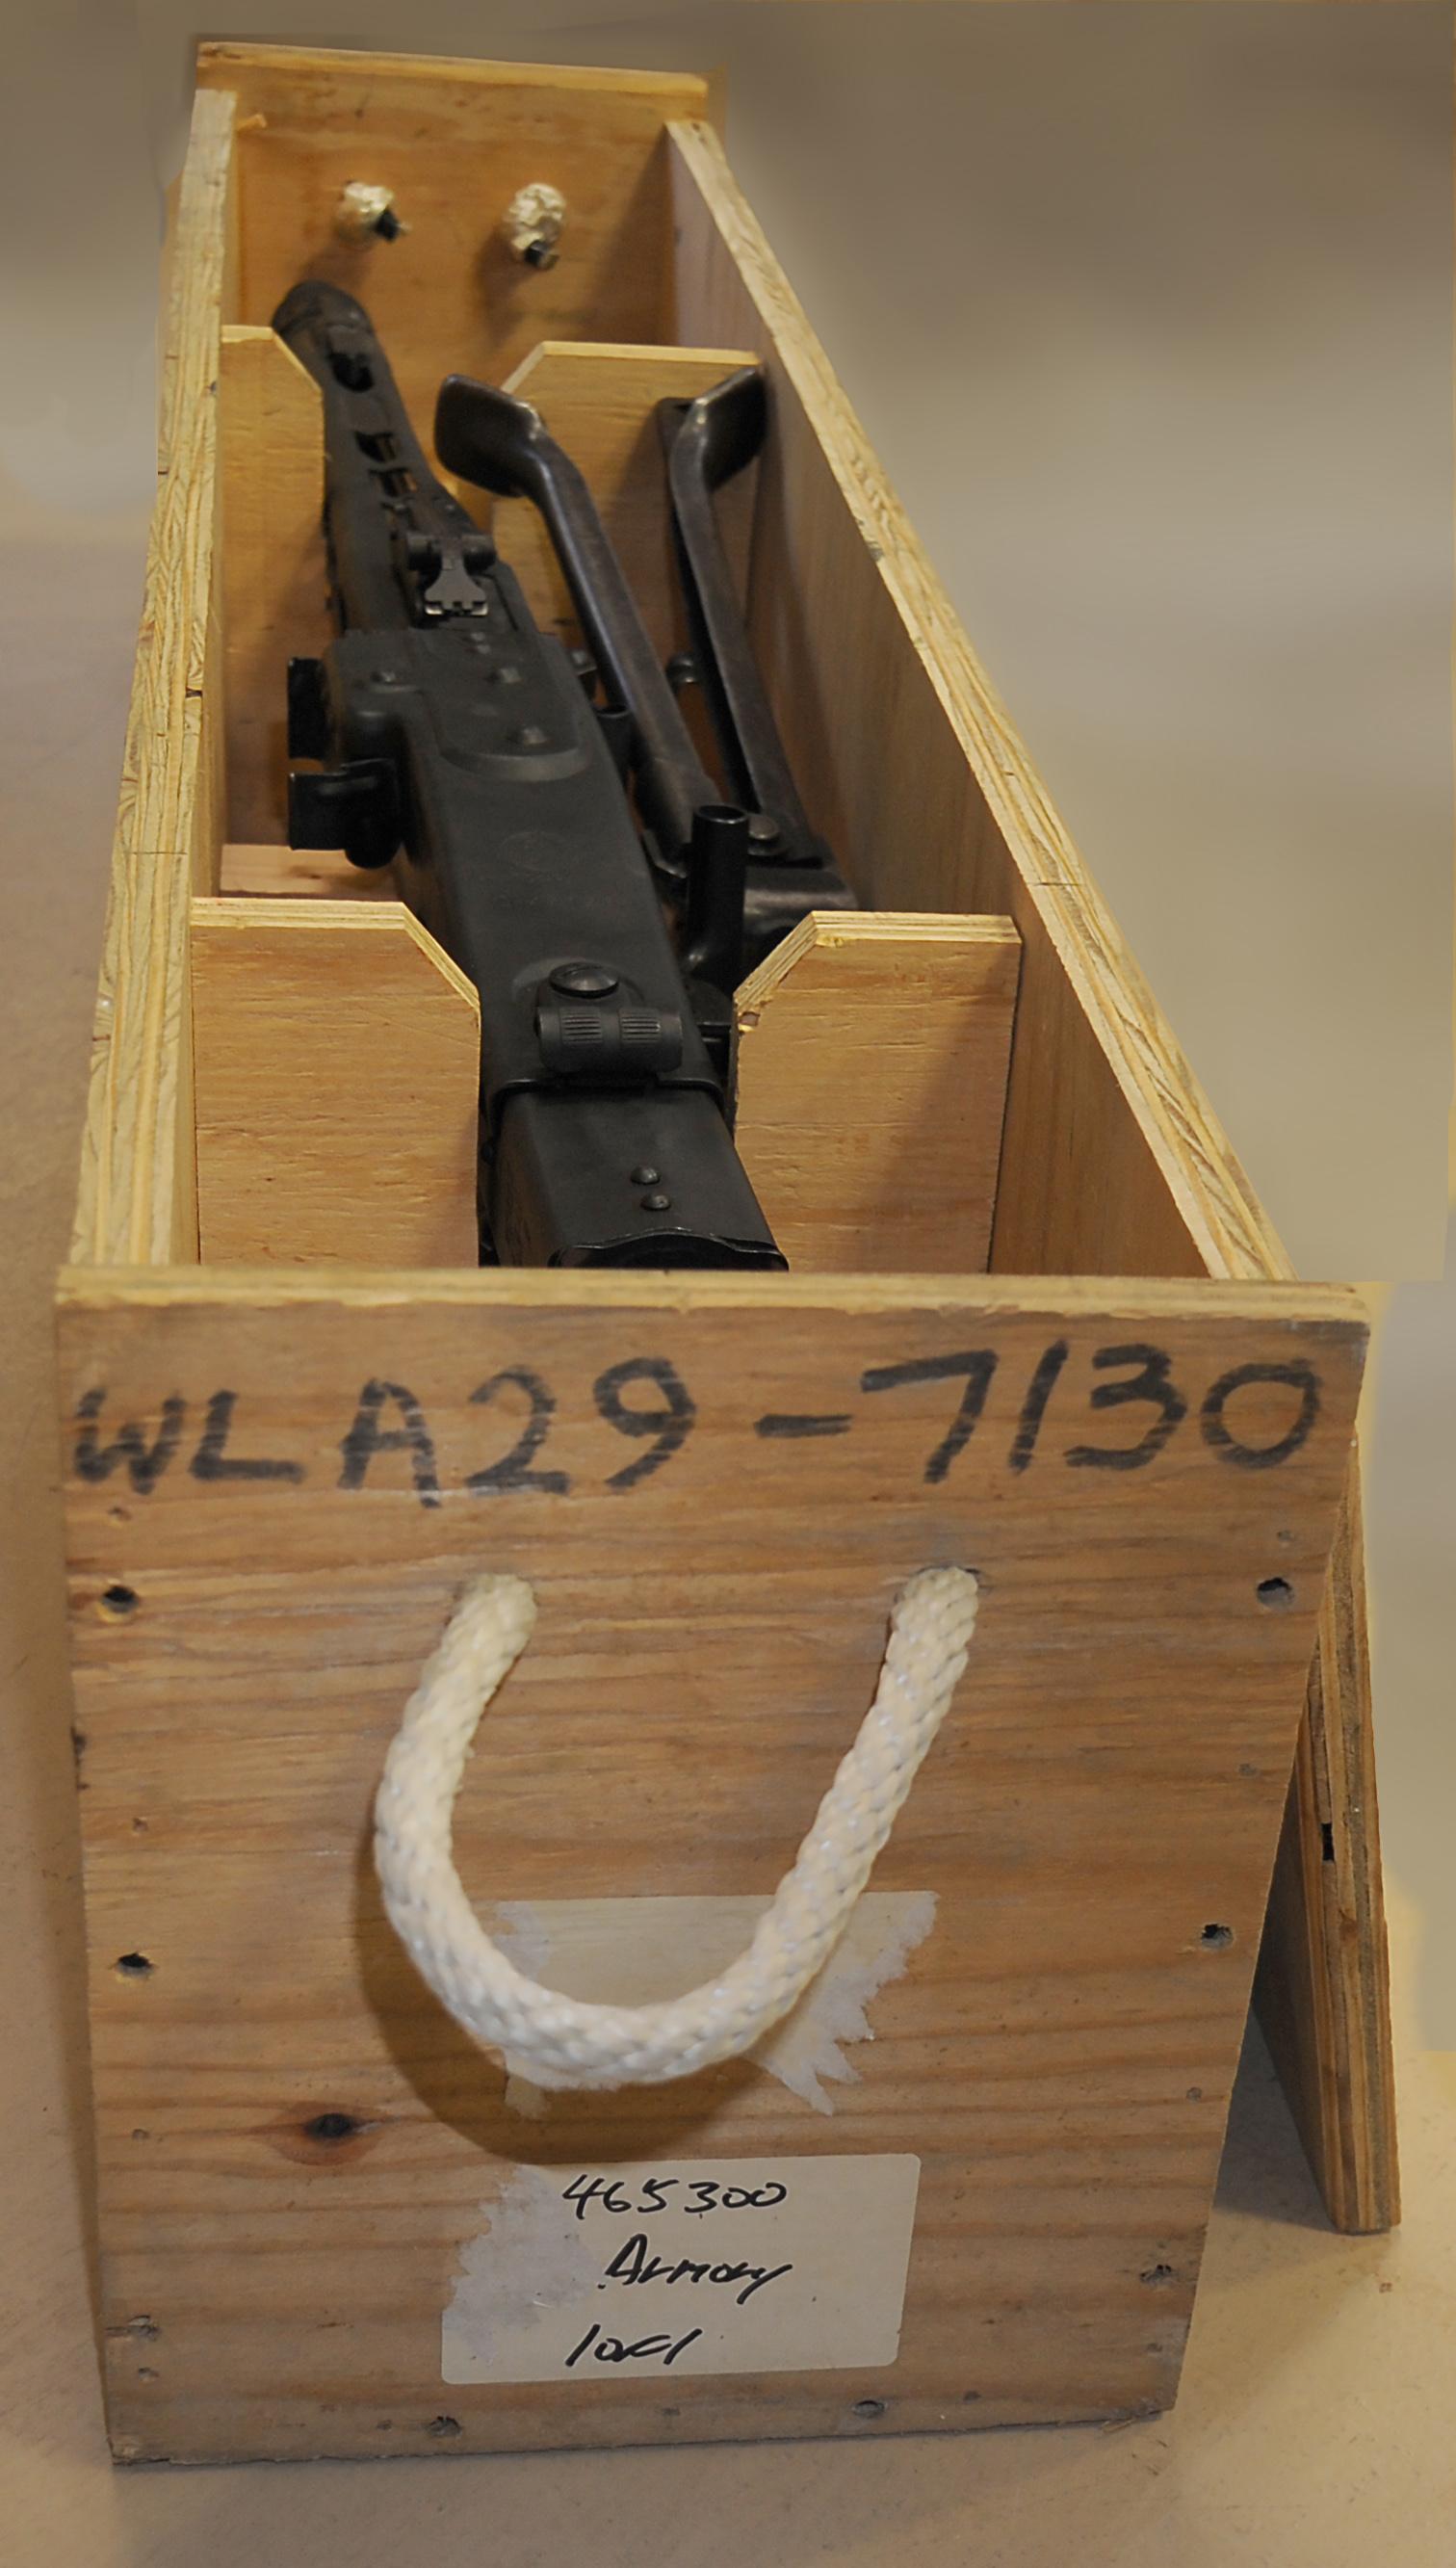 Yugoslavian M53 / MG42 8mm Mauser Belt Fed Semi-Automatic Rifle By Wiselite FFL WLA297130 (JAB1)